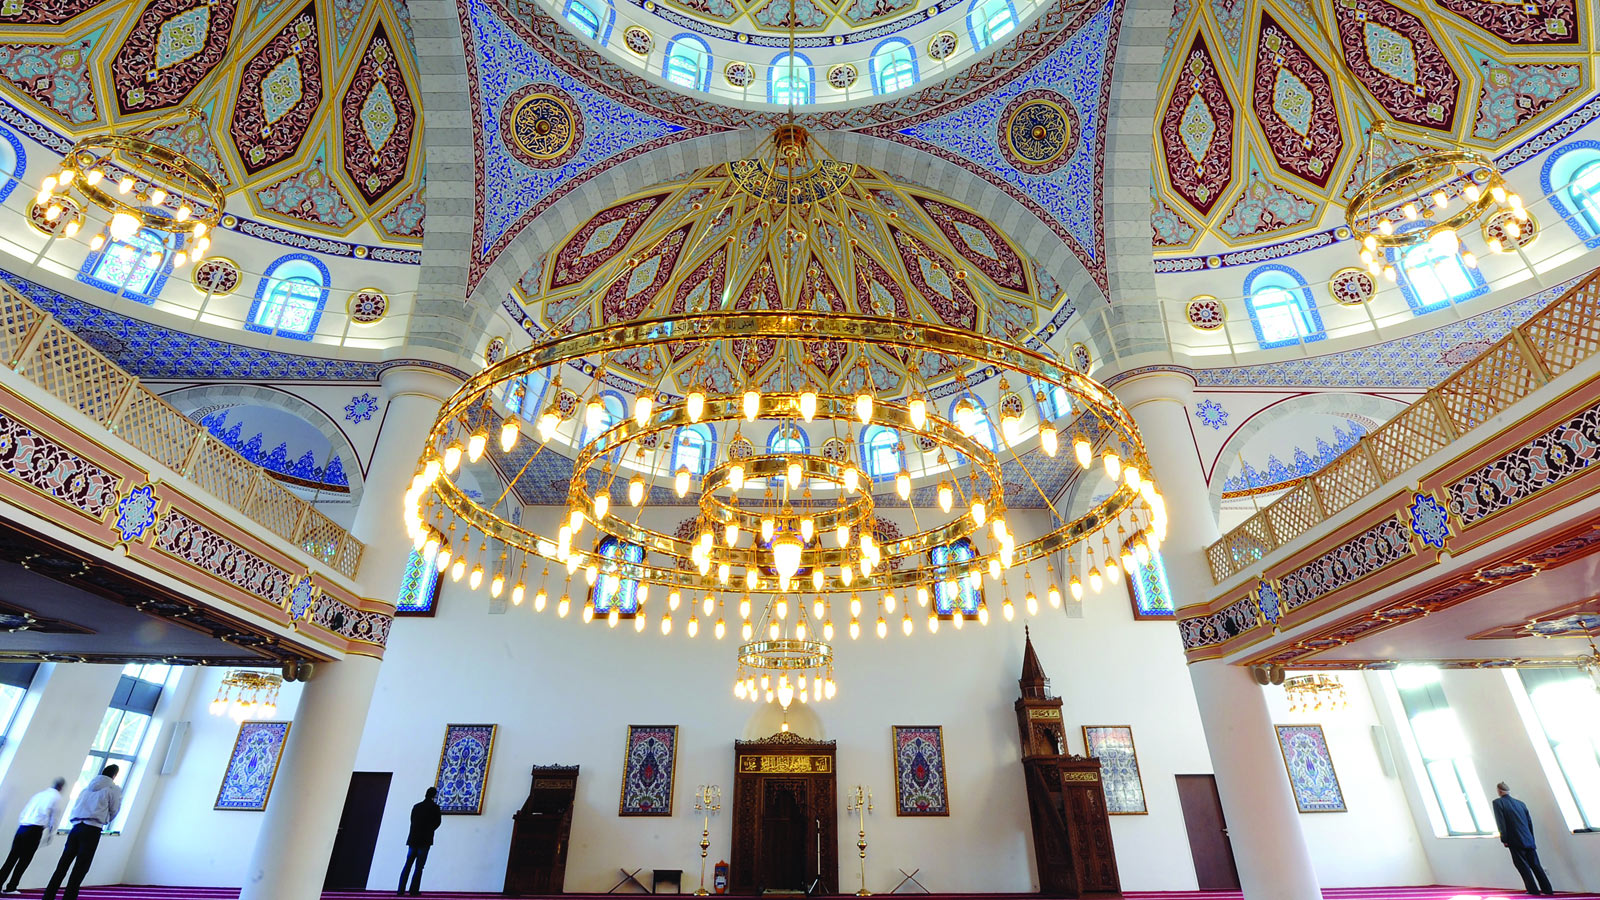 Ottoman Model Mosque Chandelier - Duisburg